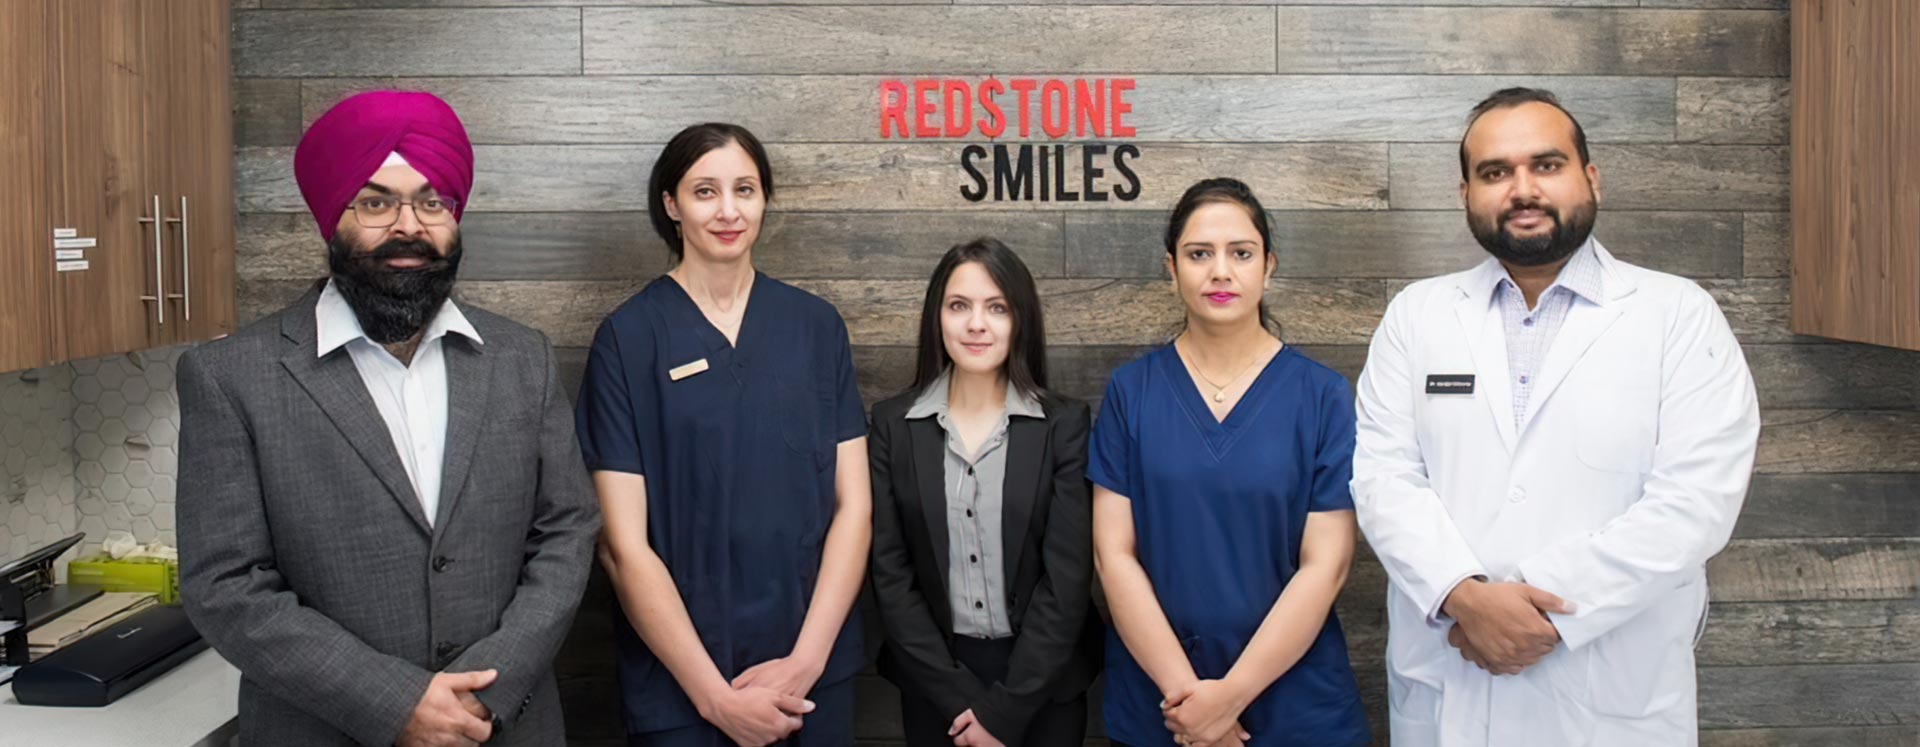 Meet the Redstone Smiles Dental Team | Redstone Smiles Dental | General and Family Dentist | NE Calgary